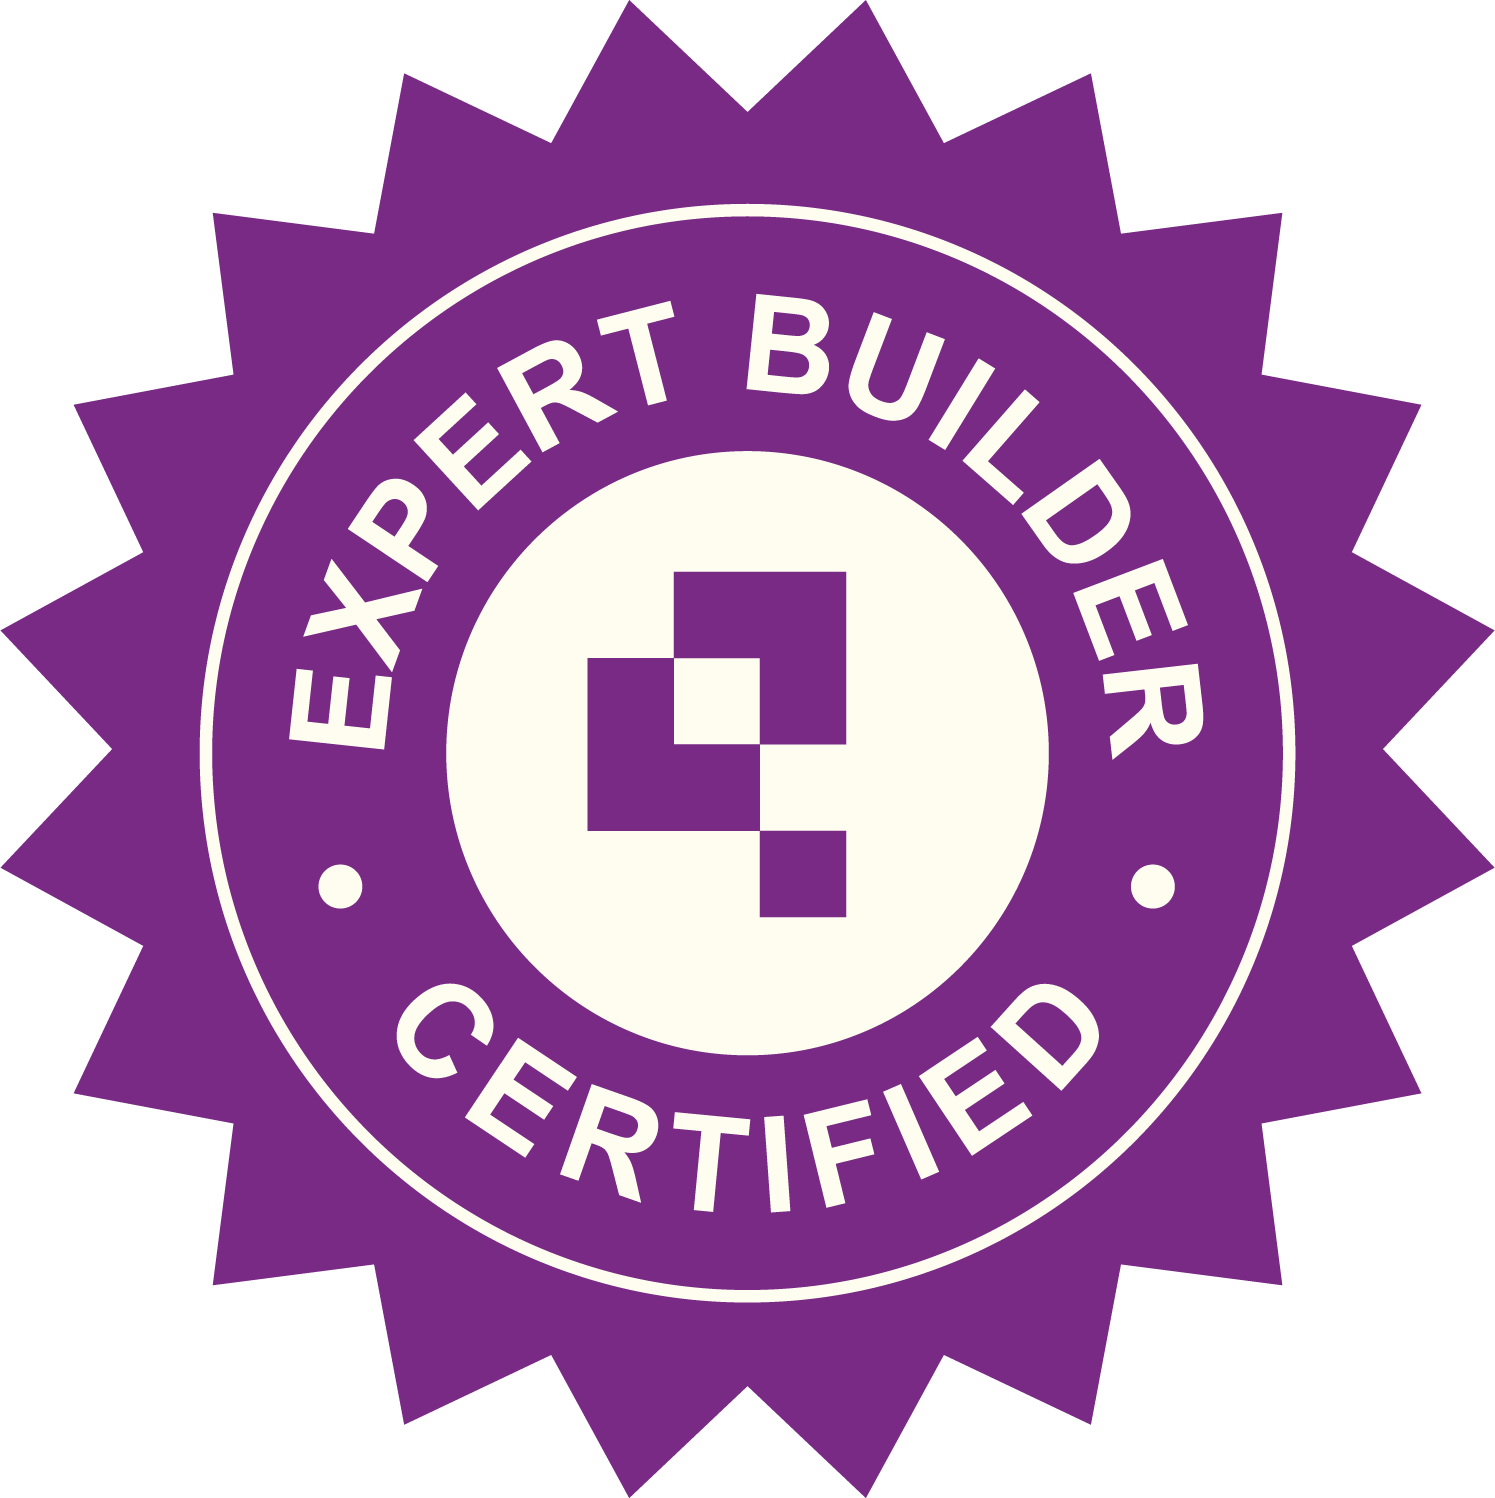 Quickbase Expert Builder Certified